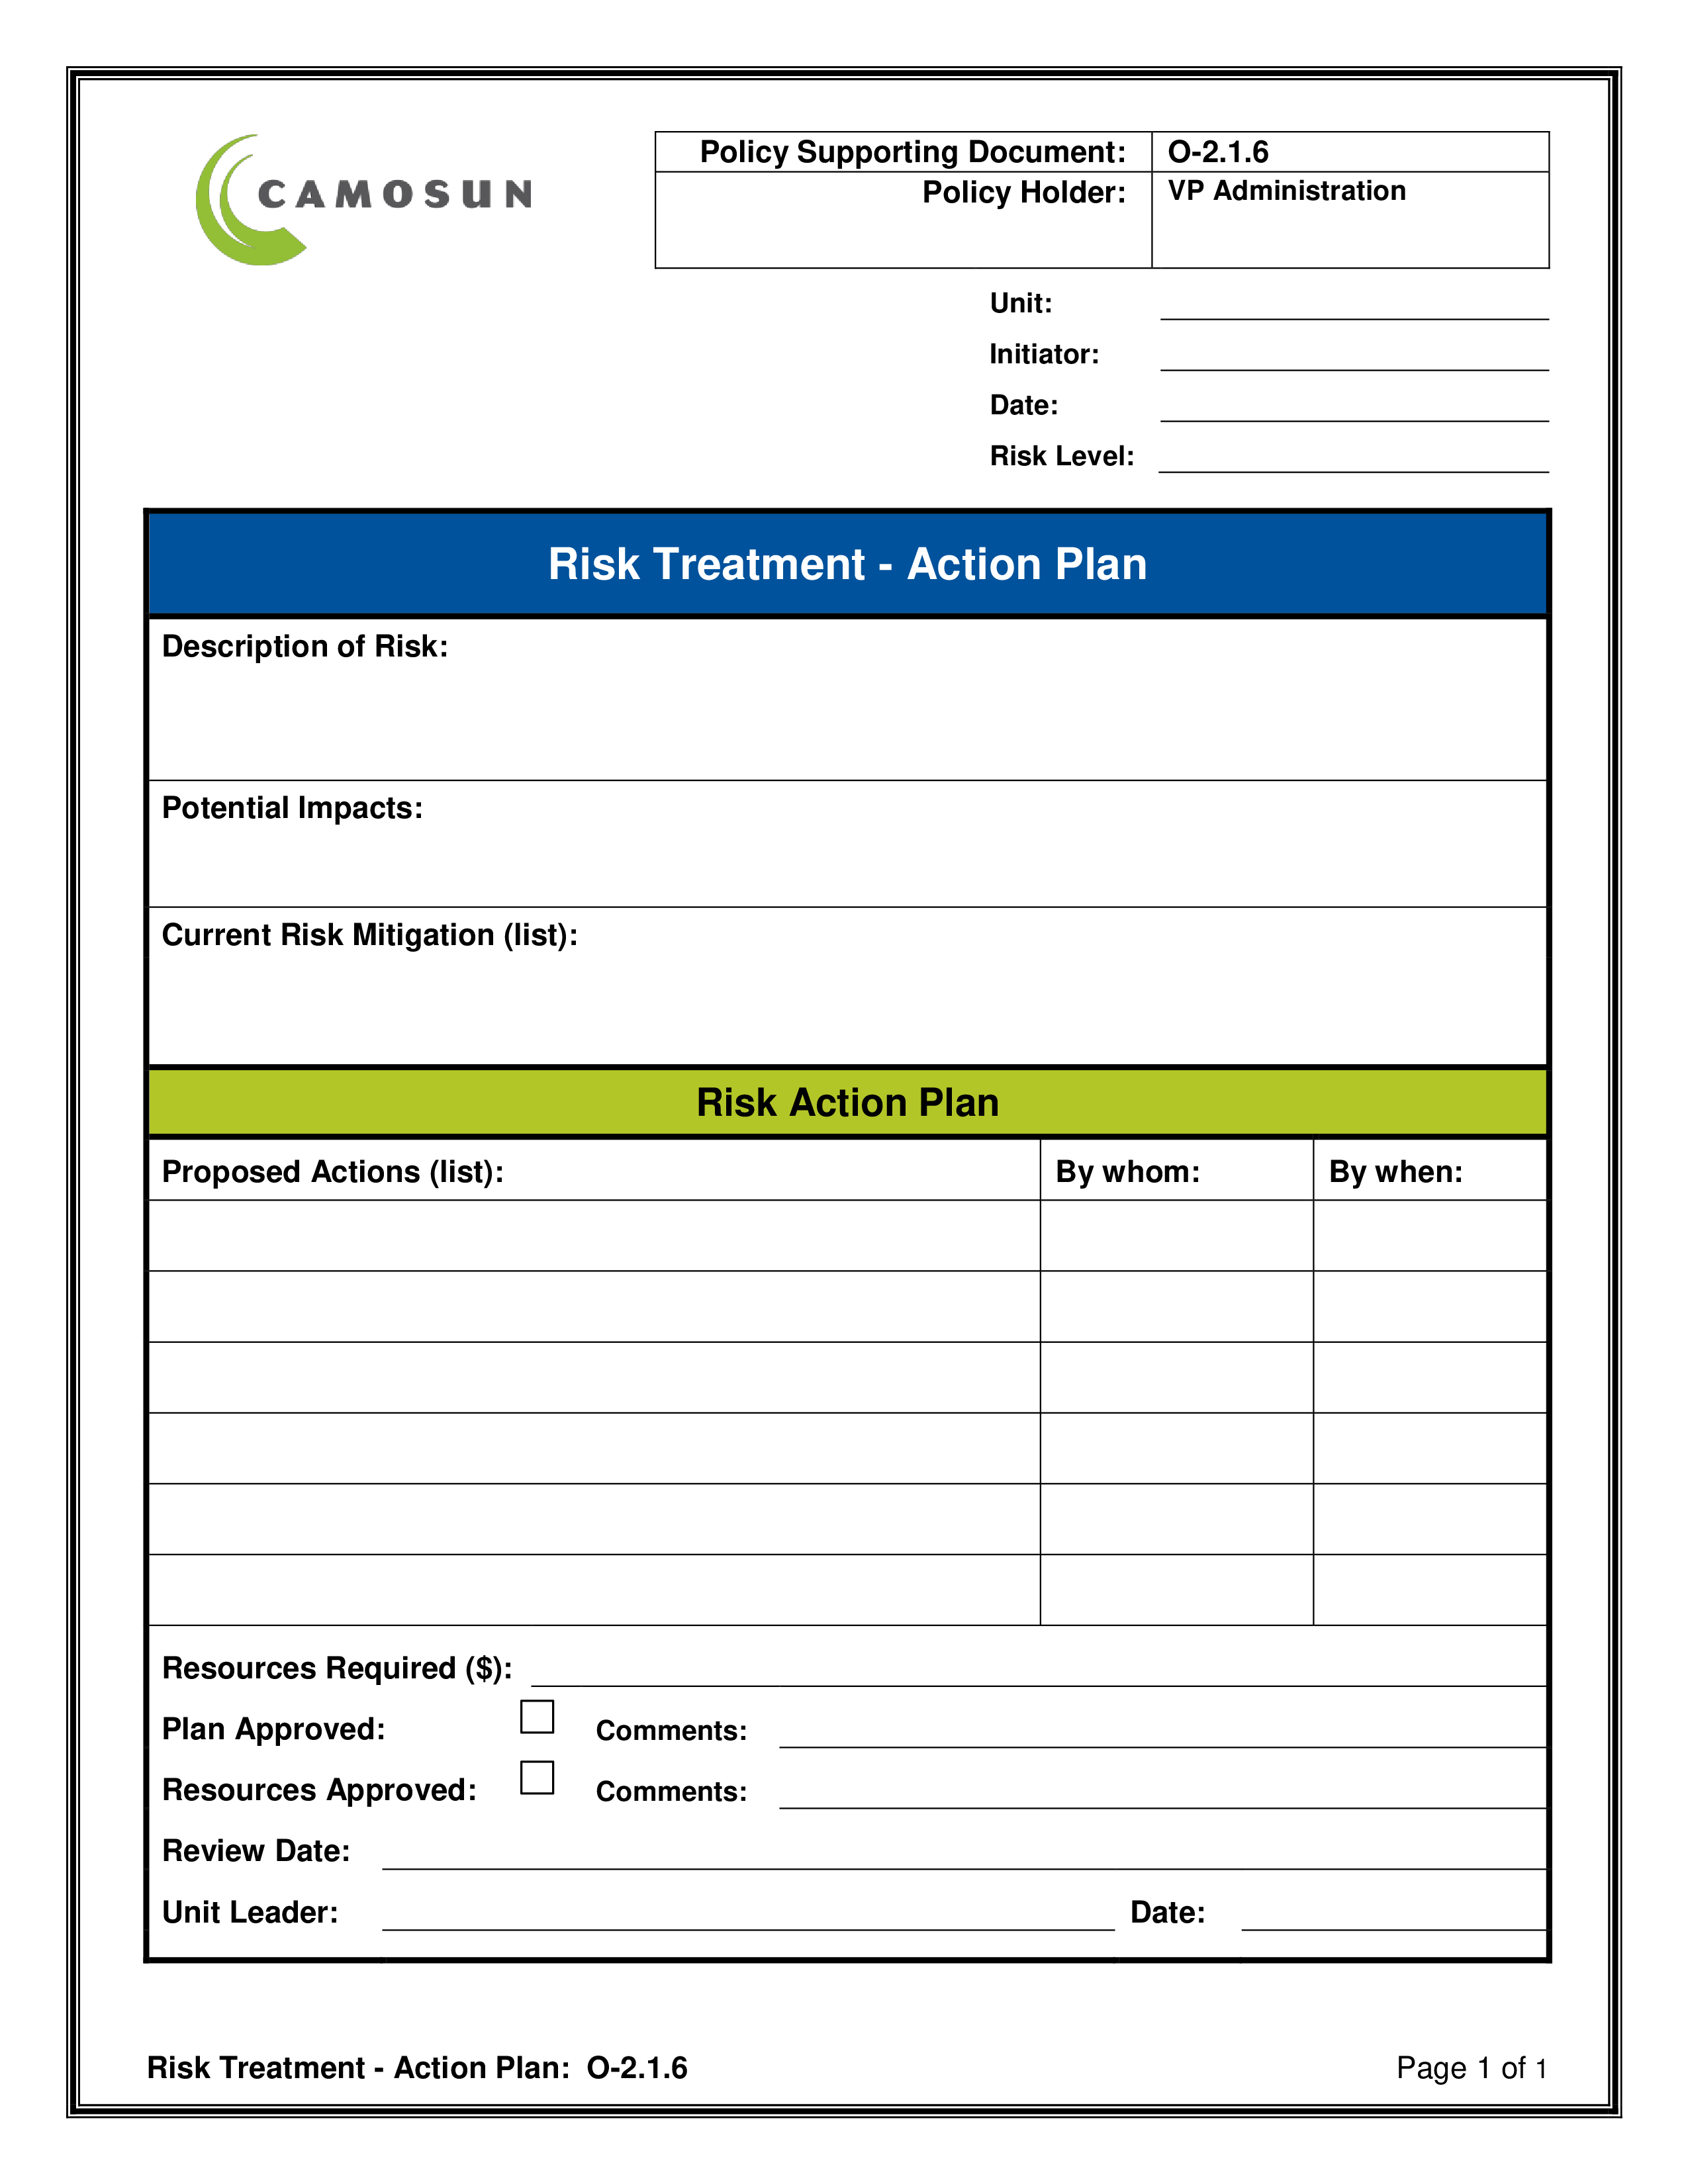 Risk Treatment Action Plan main image